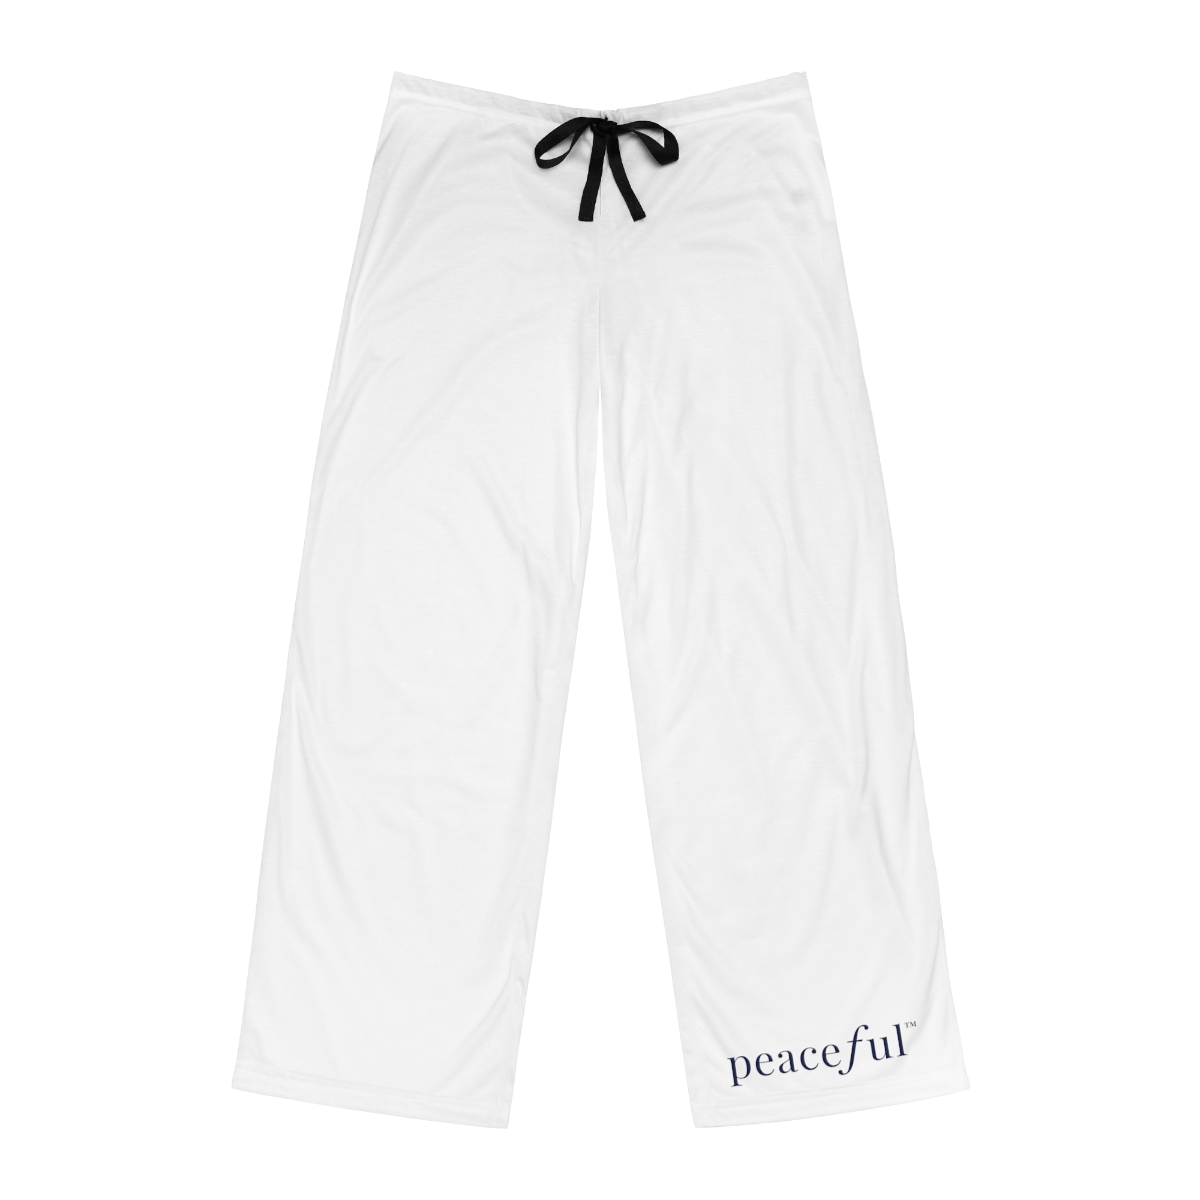 Peaceful Men's Pajama Pants (AOP) product thumbnail image